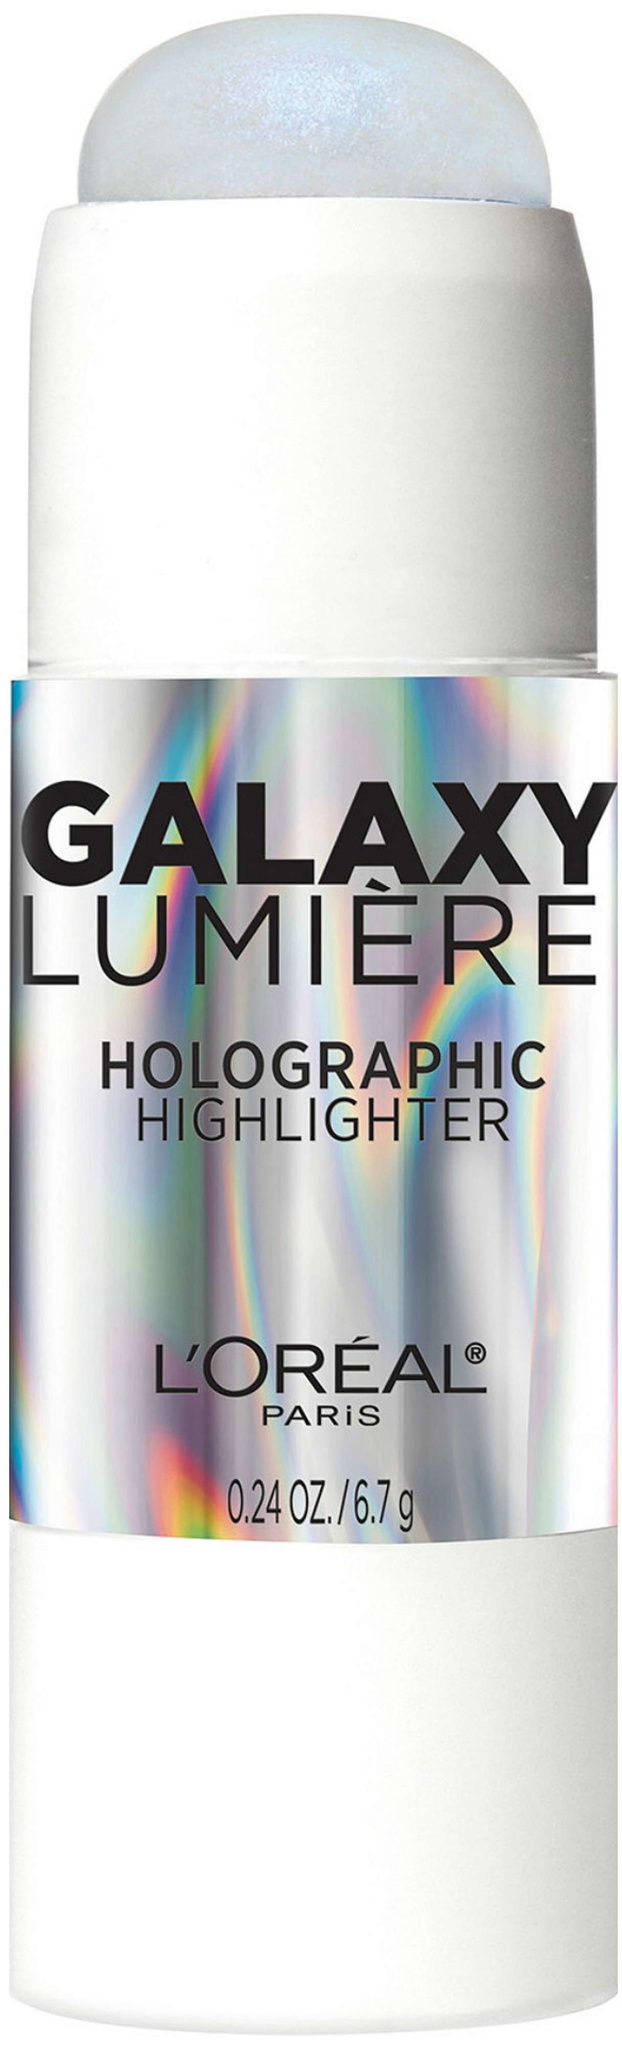 L'Oreal L'oréal Paris Infallible Galaxy Lumiere Holographic Highlighter Stick